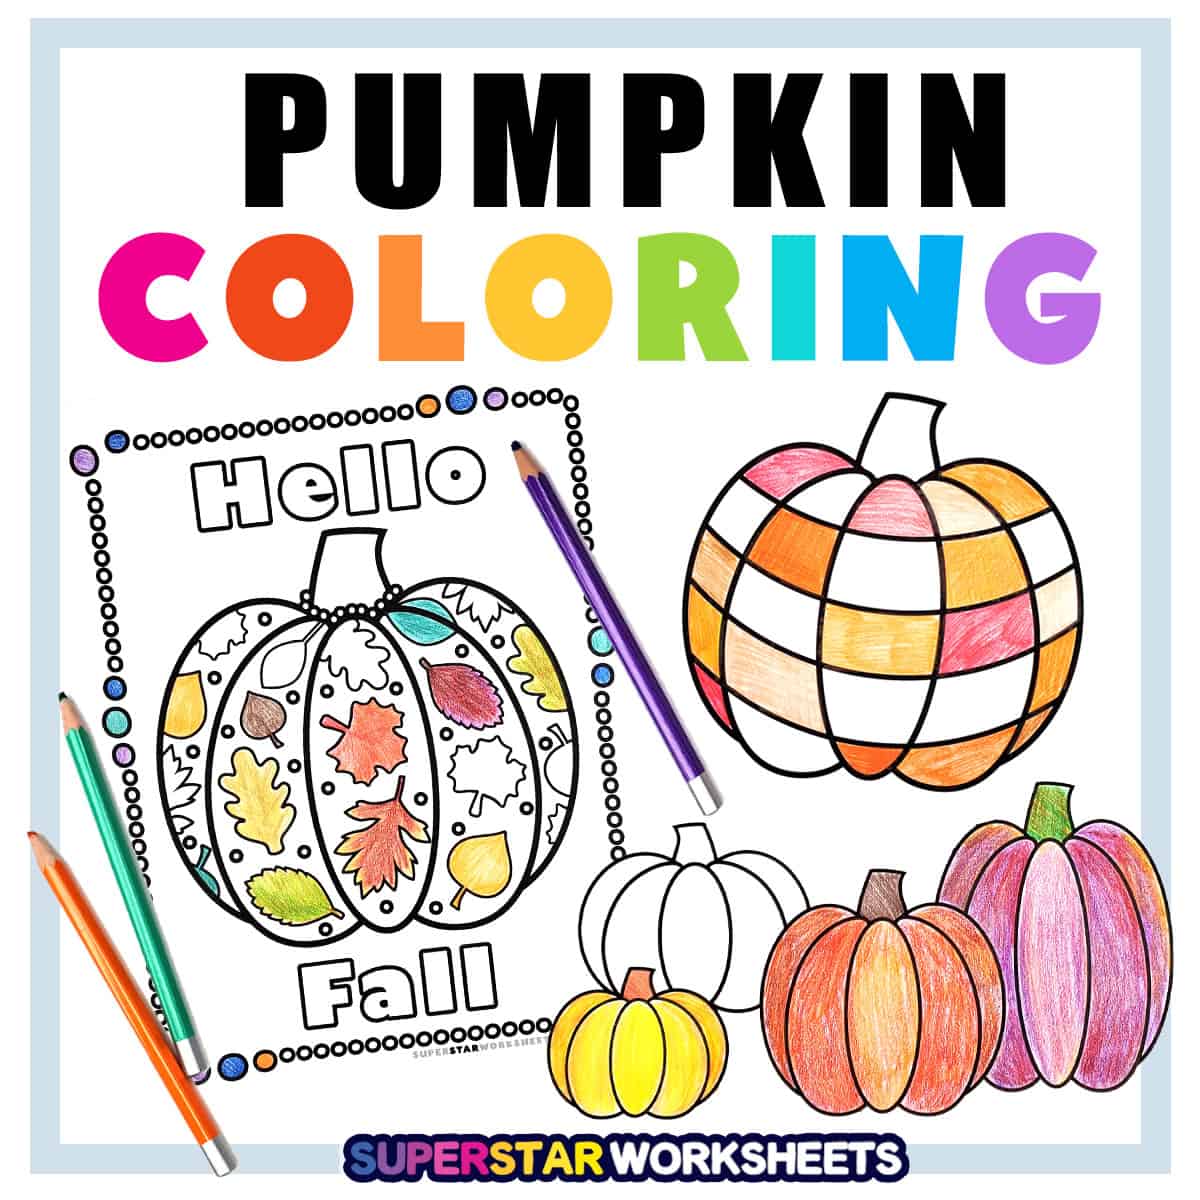 Halloween pencil sketch + Free Printable - Smiling Colors